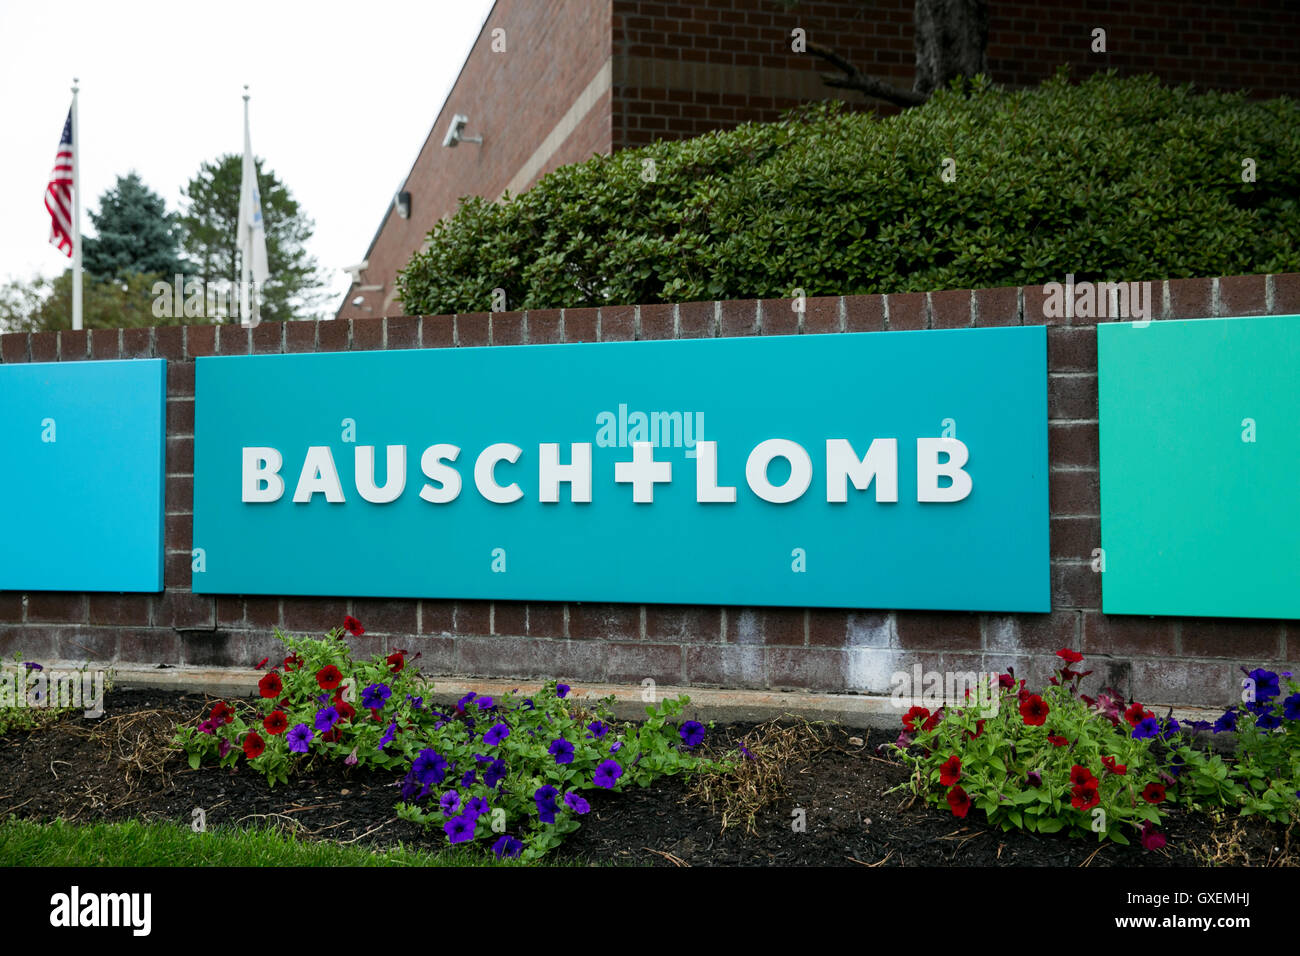 Bausch lomb immagini e fotografie stock ad alta risoluzione - Alamy